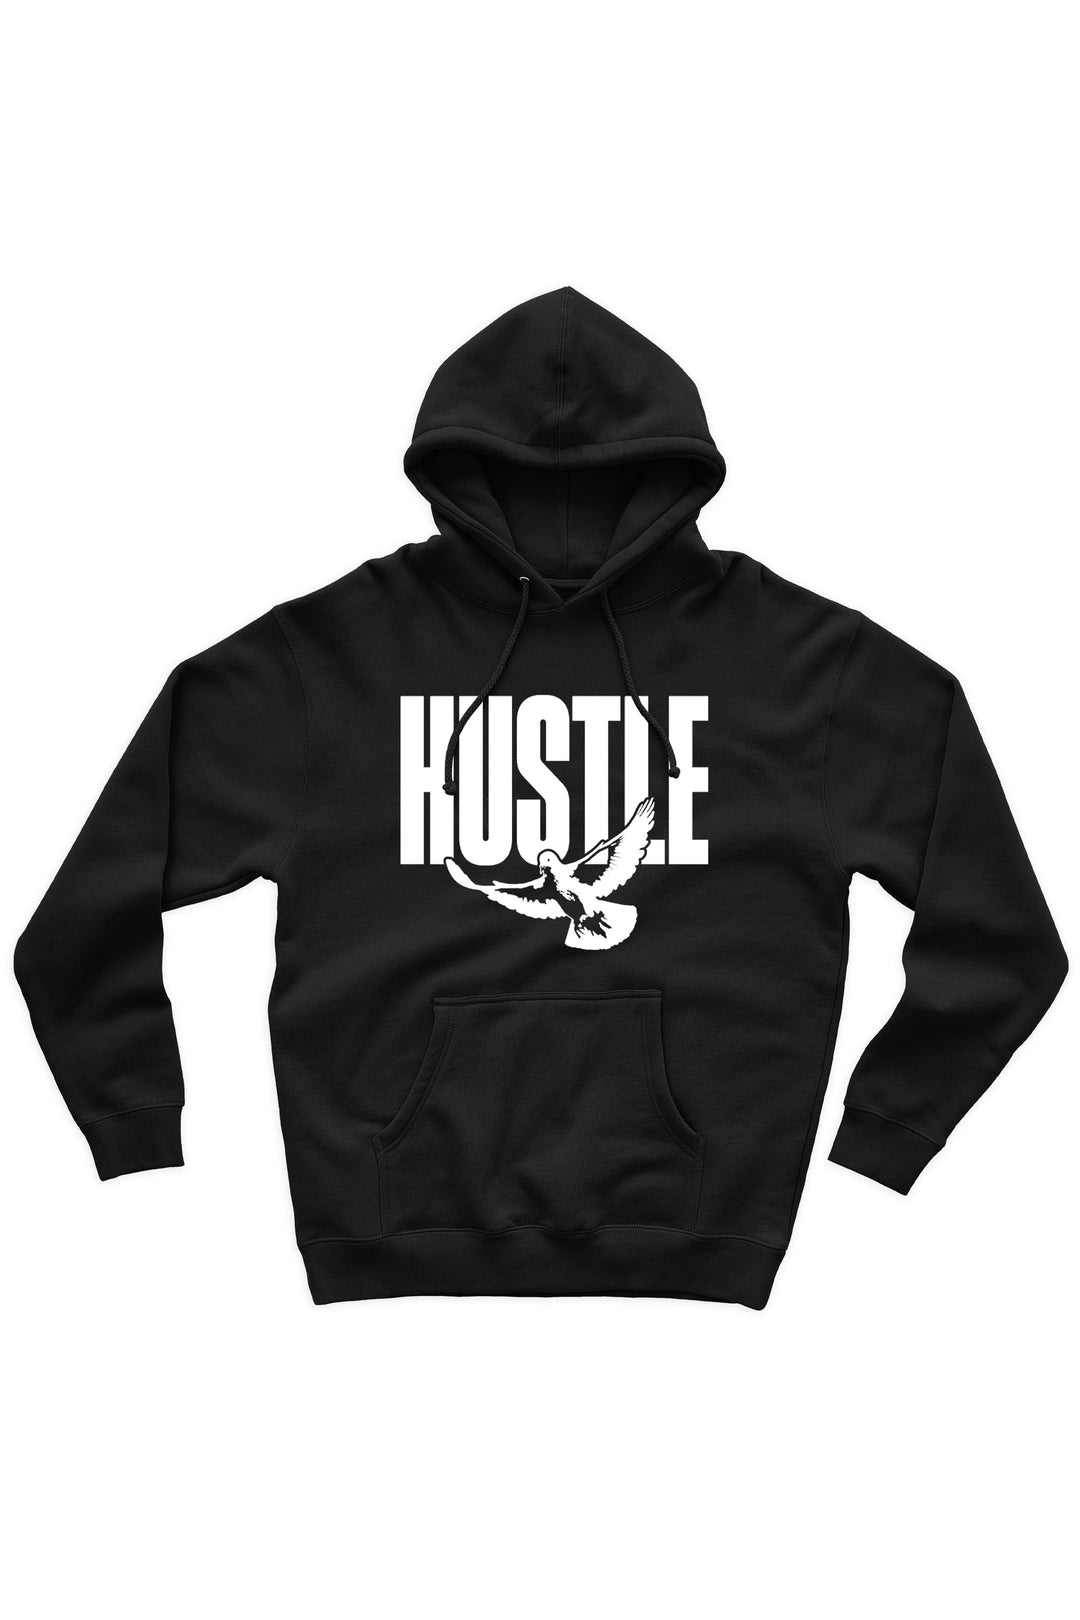 Hustle Dove Hoodie (White Logo) - Zamage